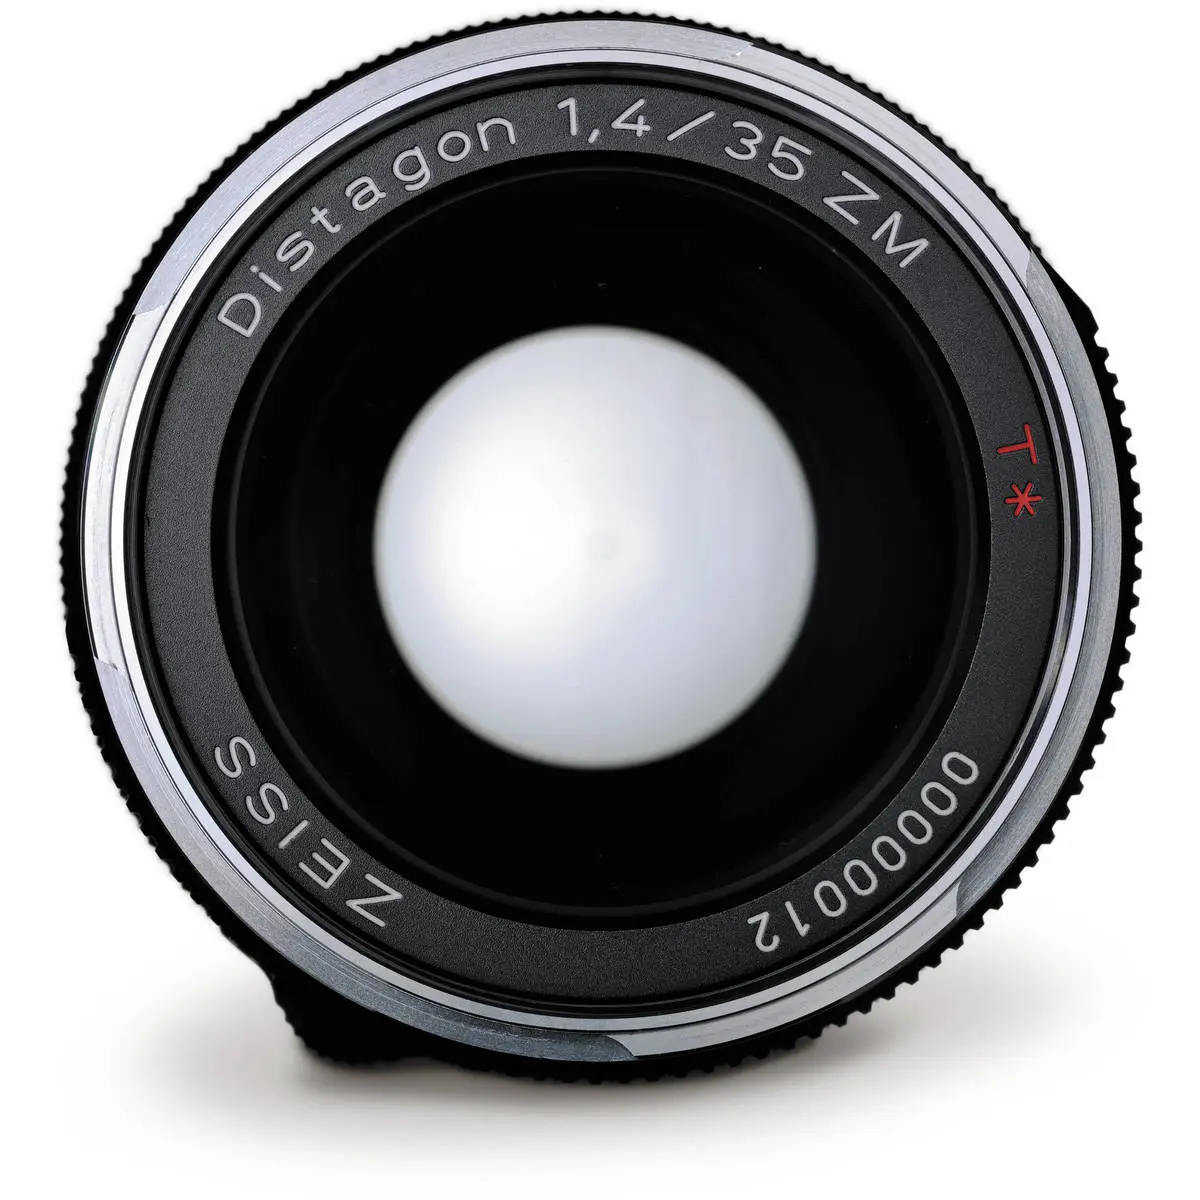 5. Carl Zeiss Distagon T* 35mm f/1.4 ZM Lens (Black) Lens